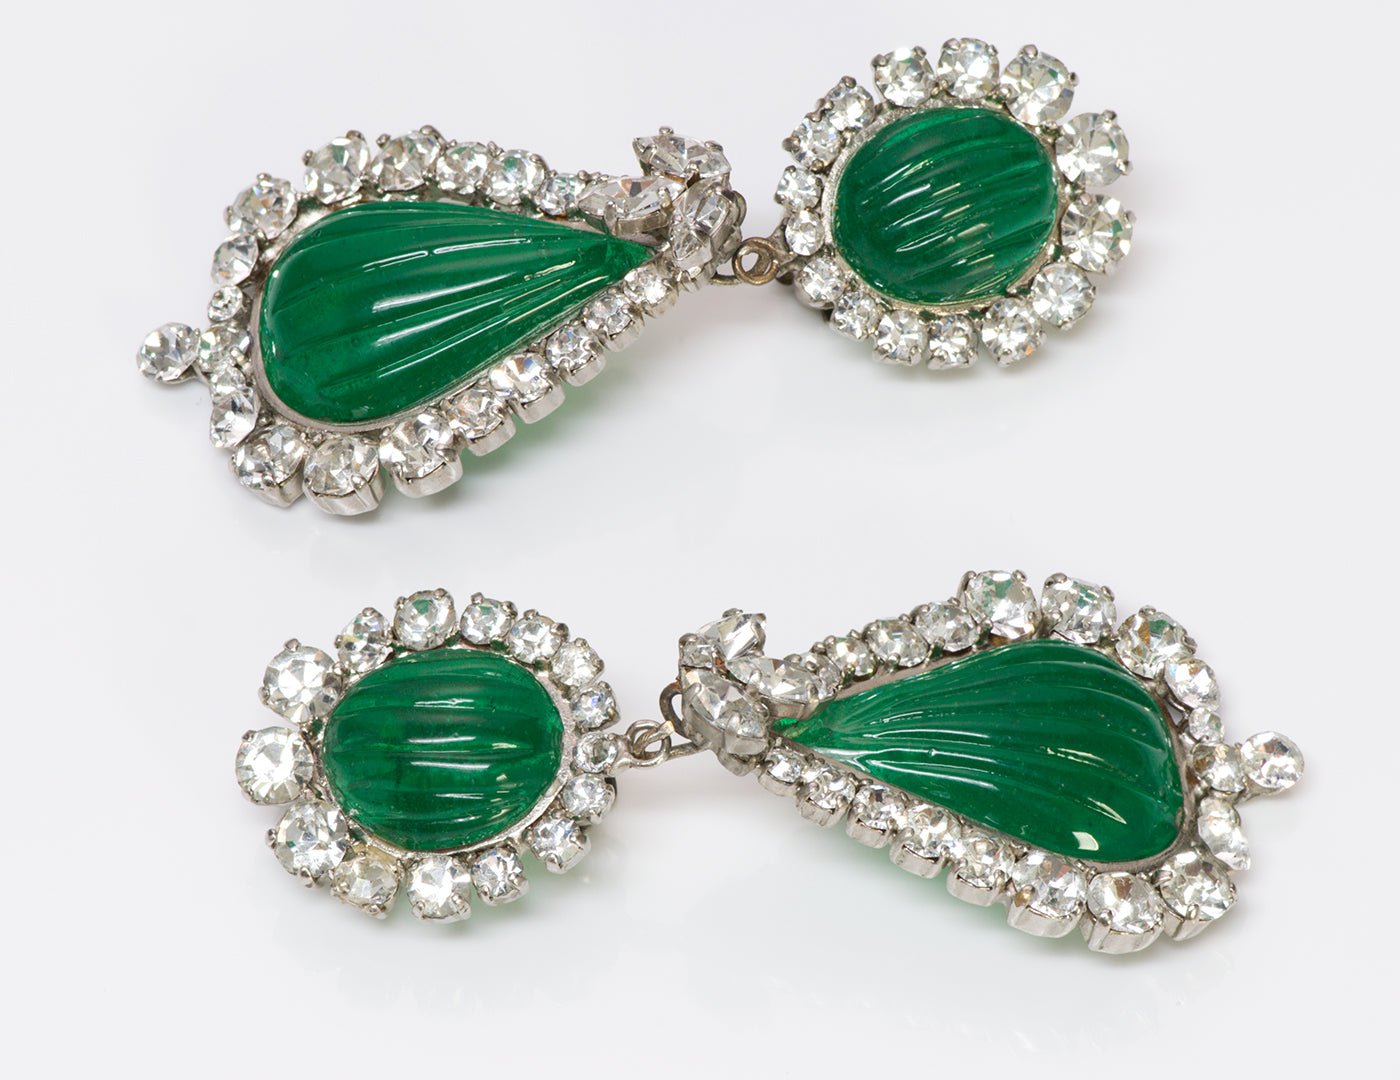 Christian Dior Maison Gripoix Green Poured Glass Earrings